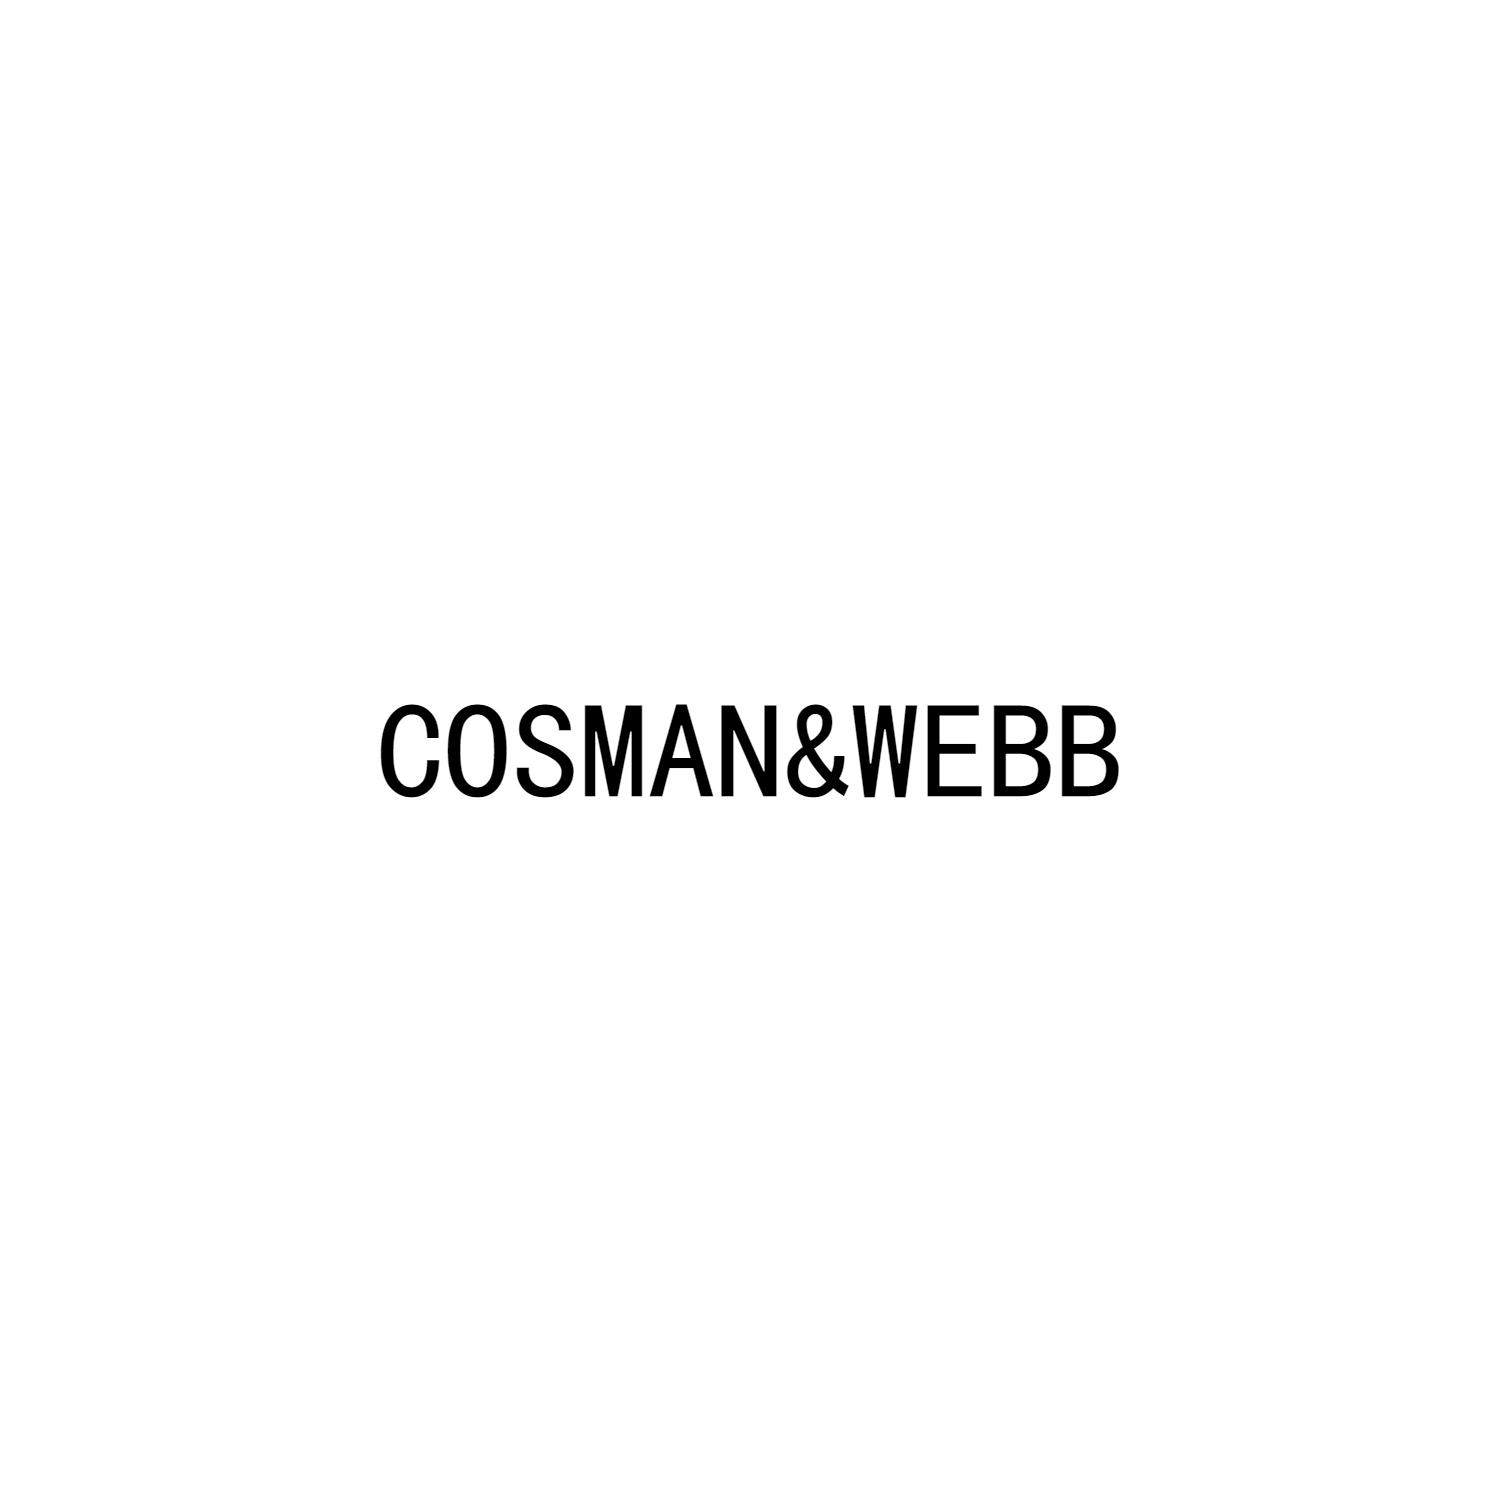 COSMAN&WEBB